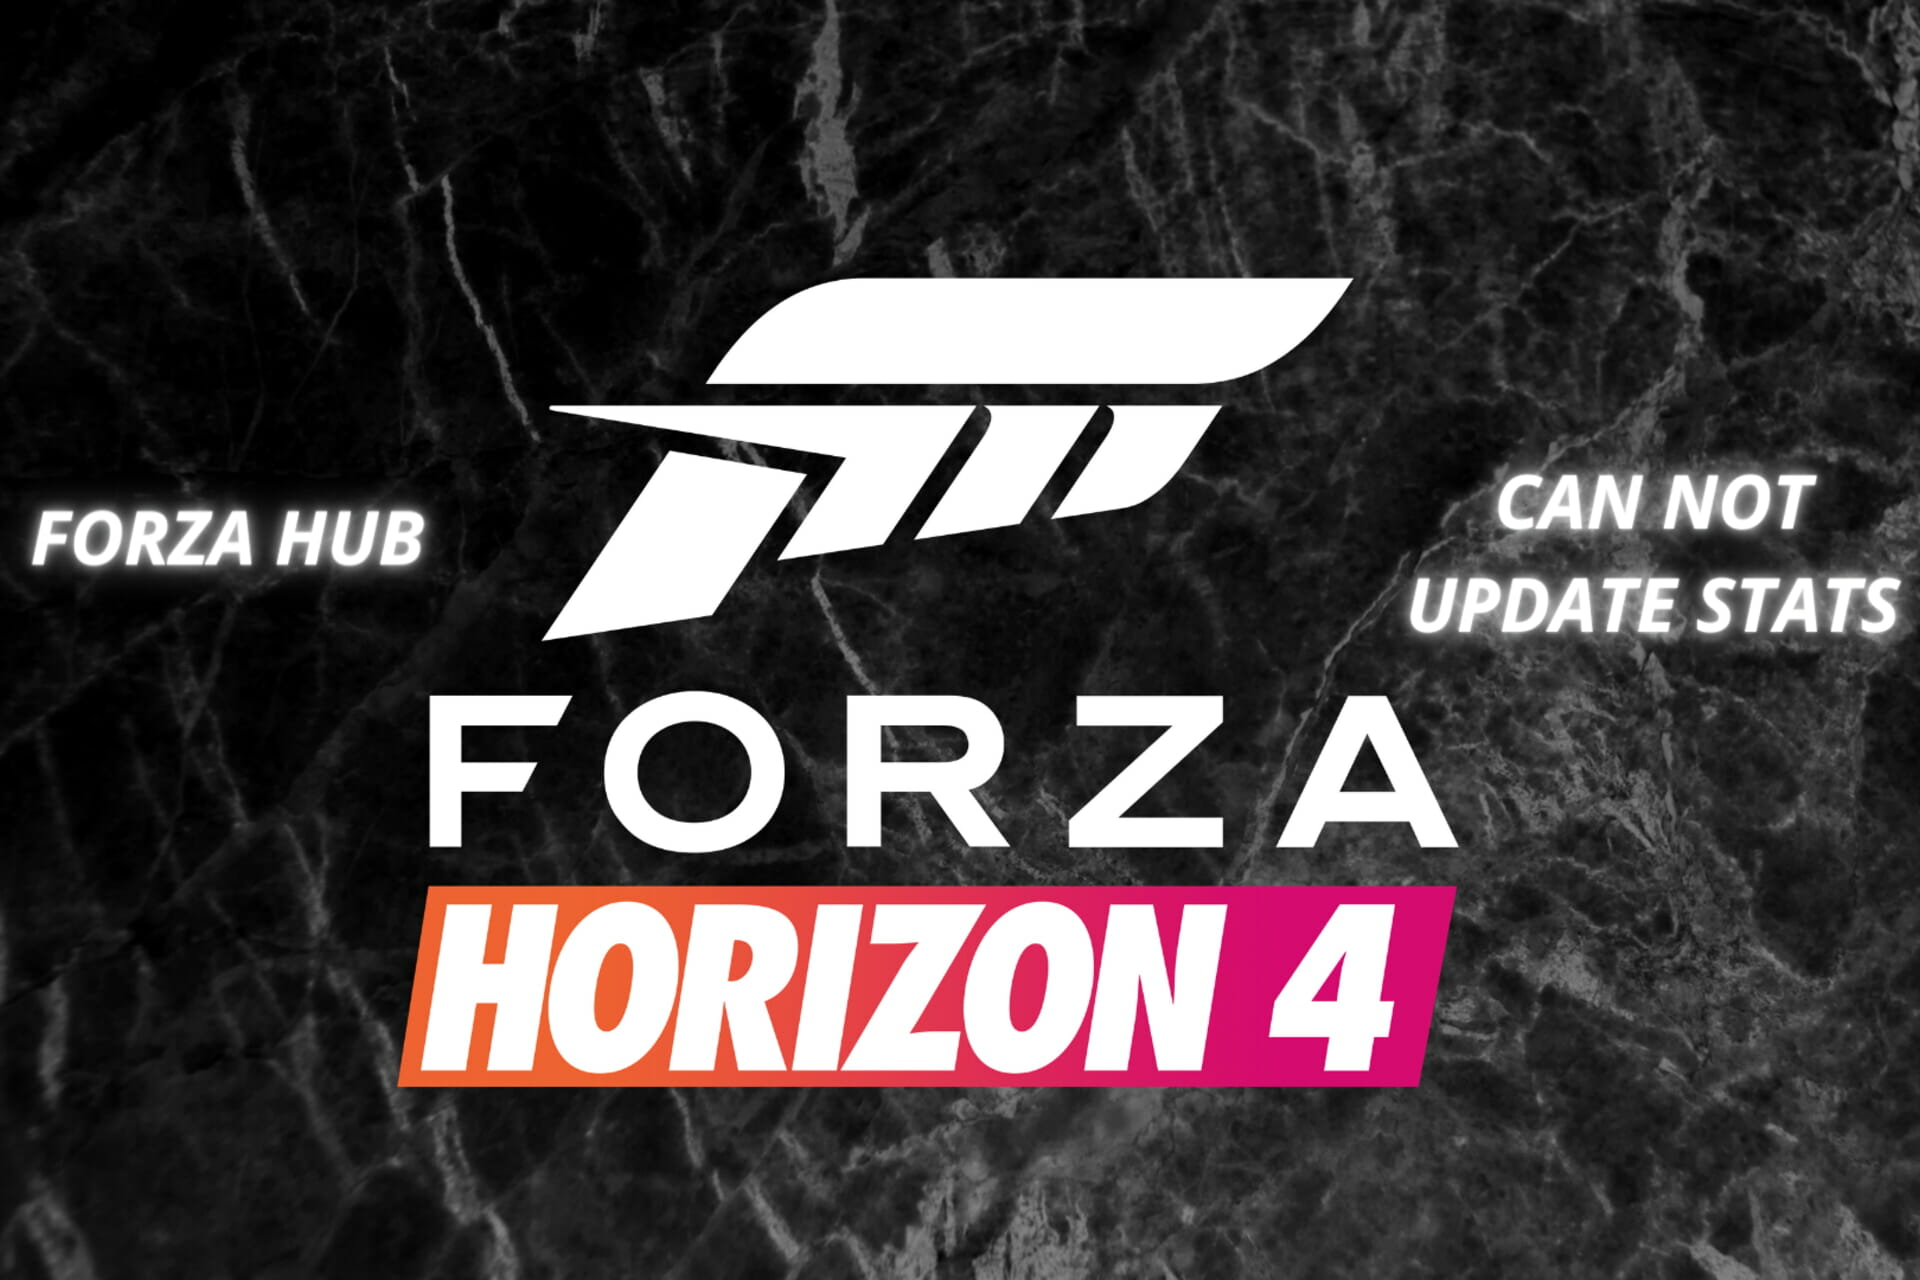 Fix: Forza Hub not updating stats Horizon 4